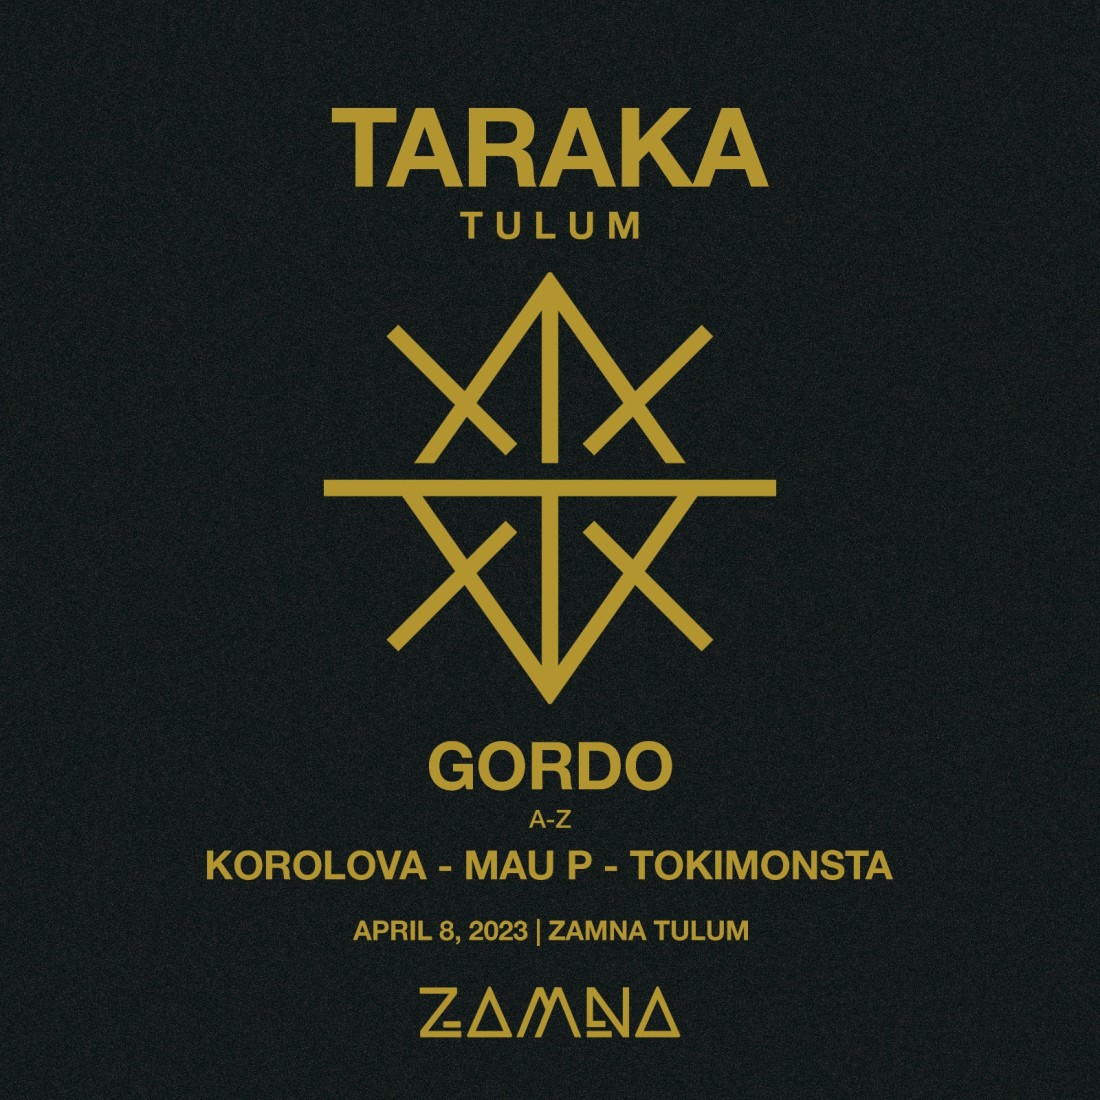 TARAKA by GORDO - Early Bird GENERAL